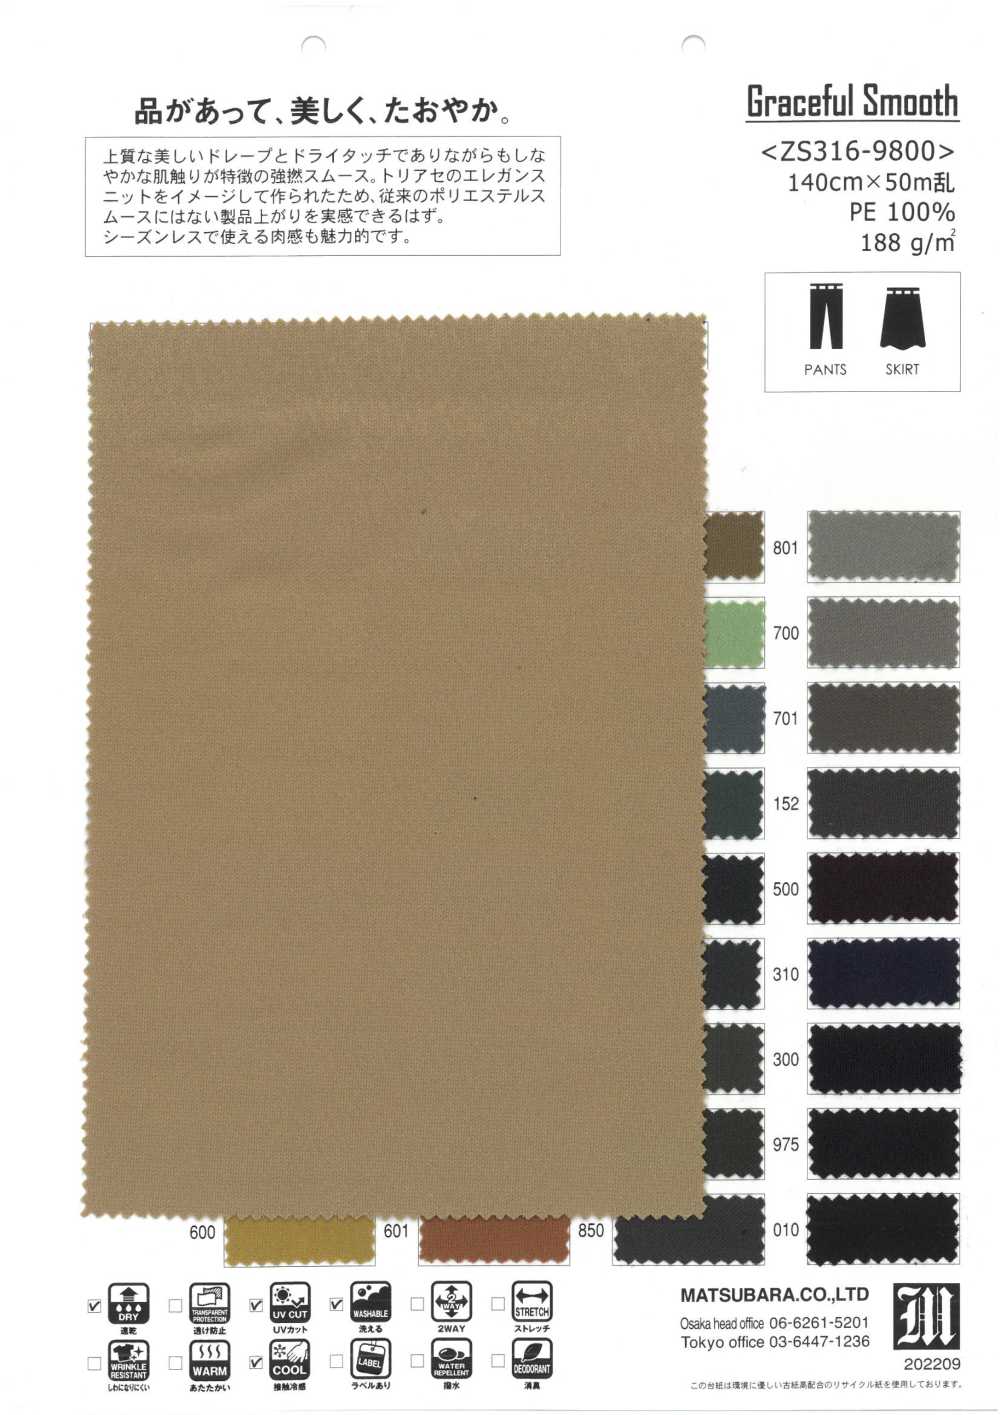 ZS316-9800 Graceful Smooth[Textile / Fabric] Matsubara